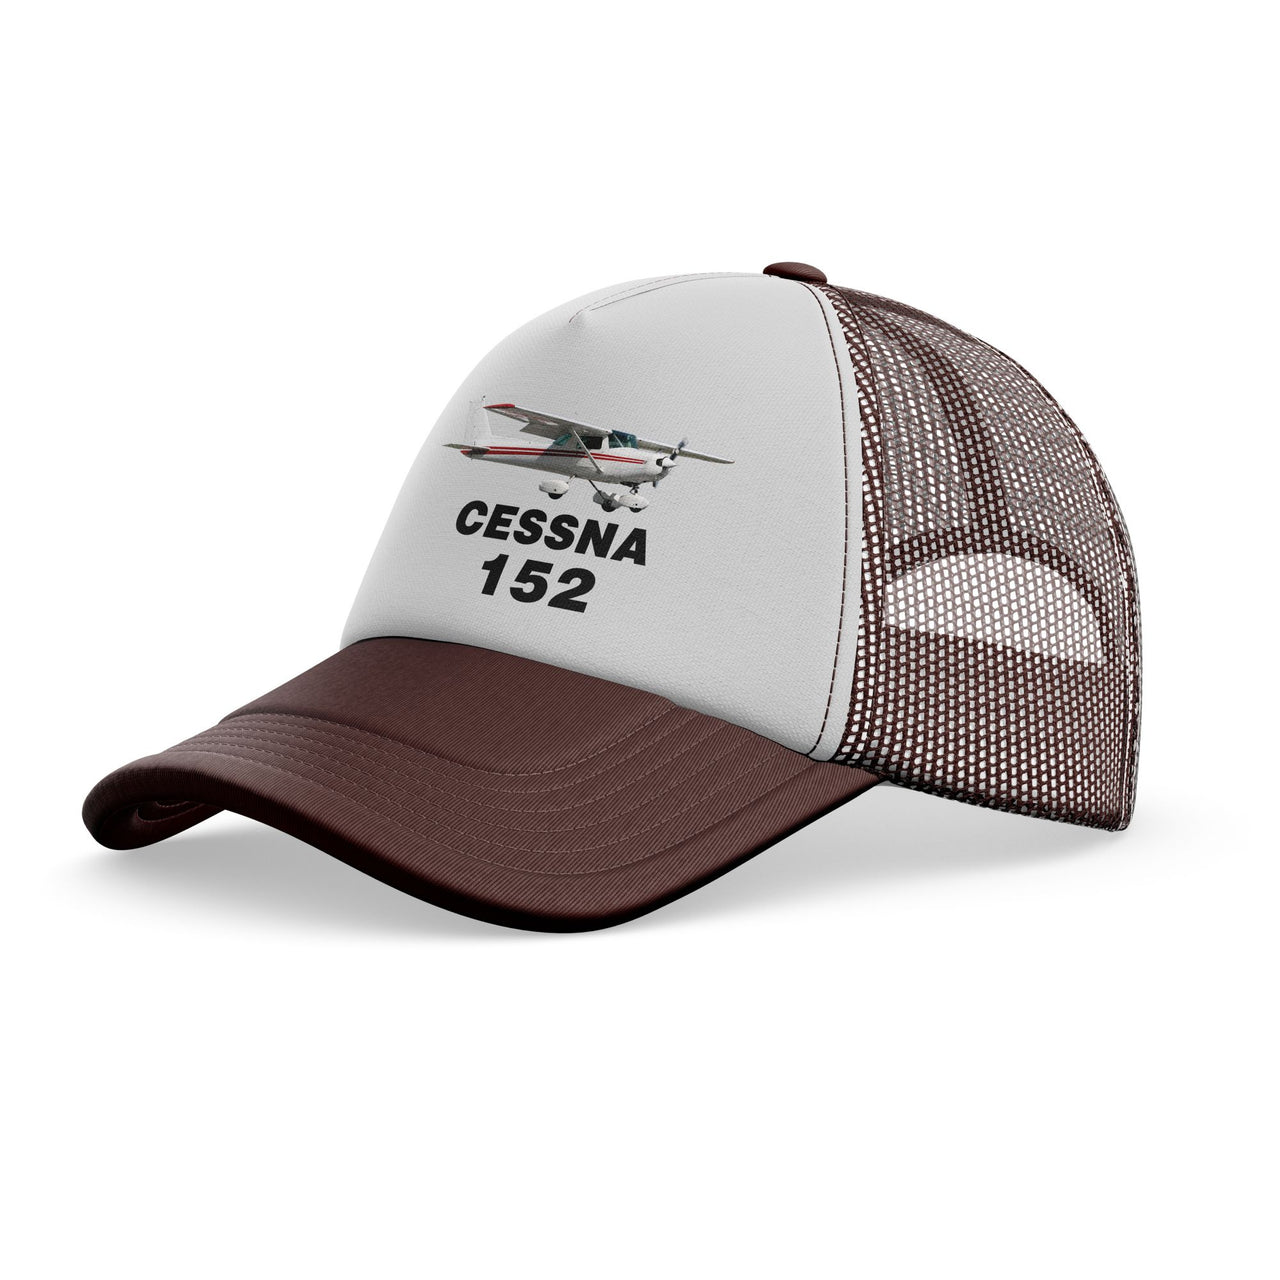 The Cessna 152 Designed Trucker Caps & Hats